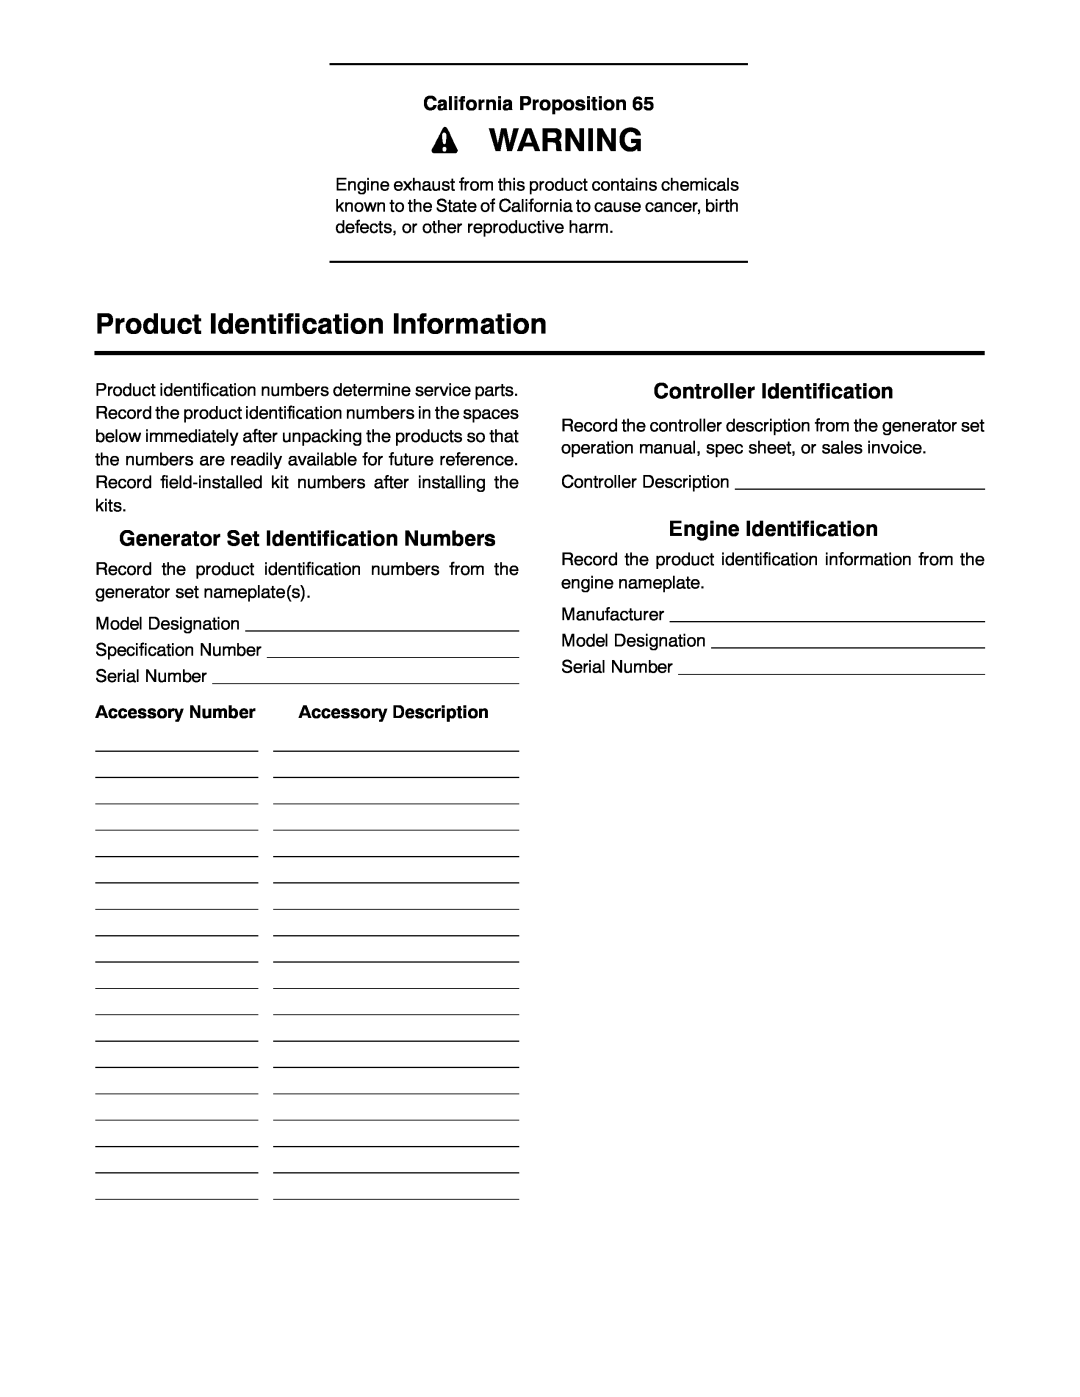 Kohler 14/20RESA manual Product Identification Information, Controller Identification, Generator Set Identification Numbers 